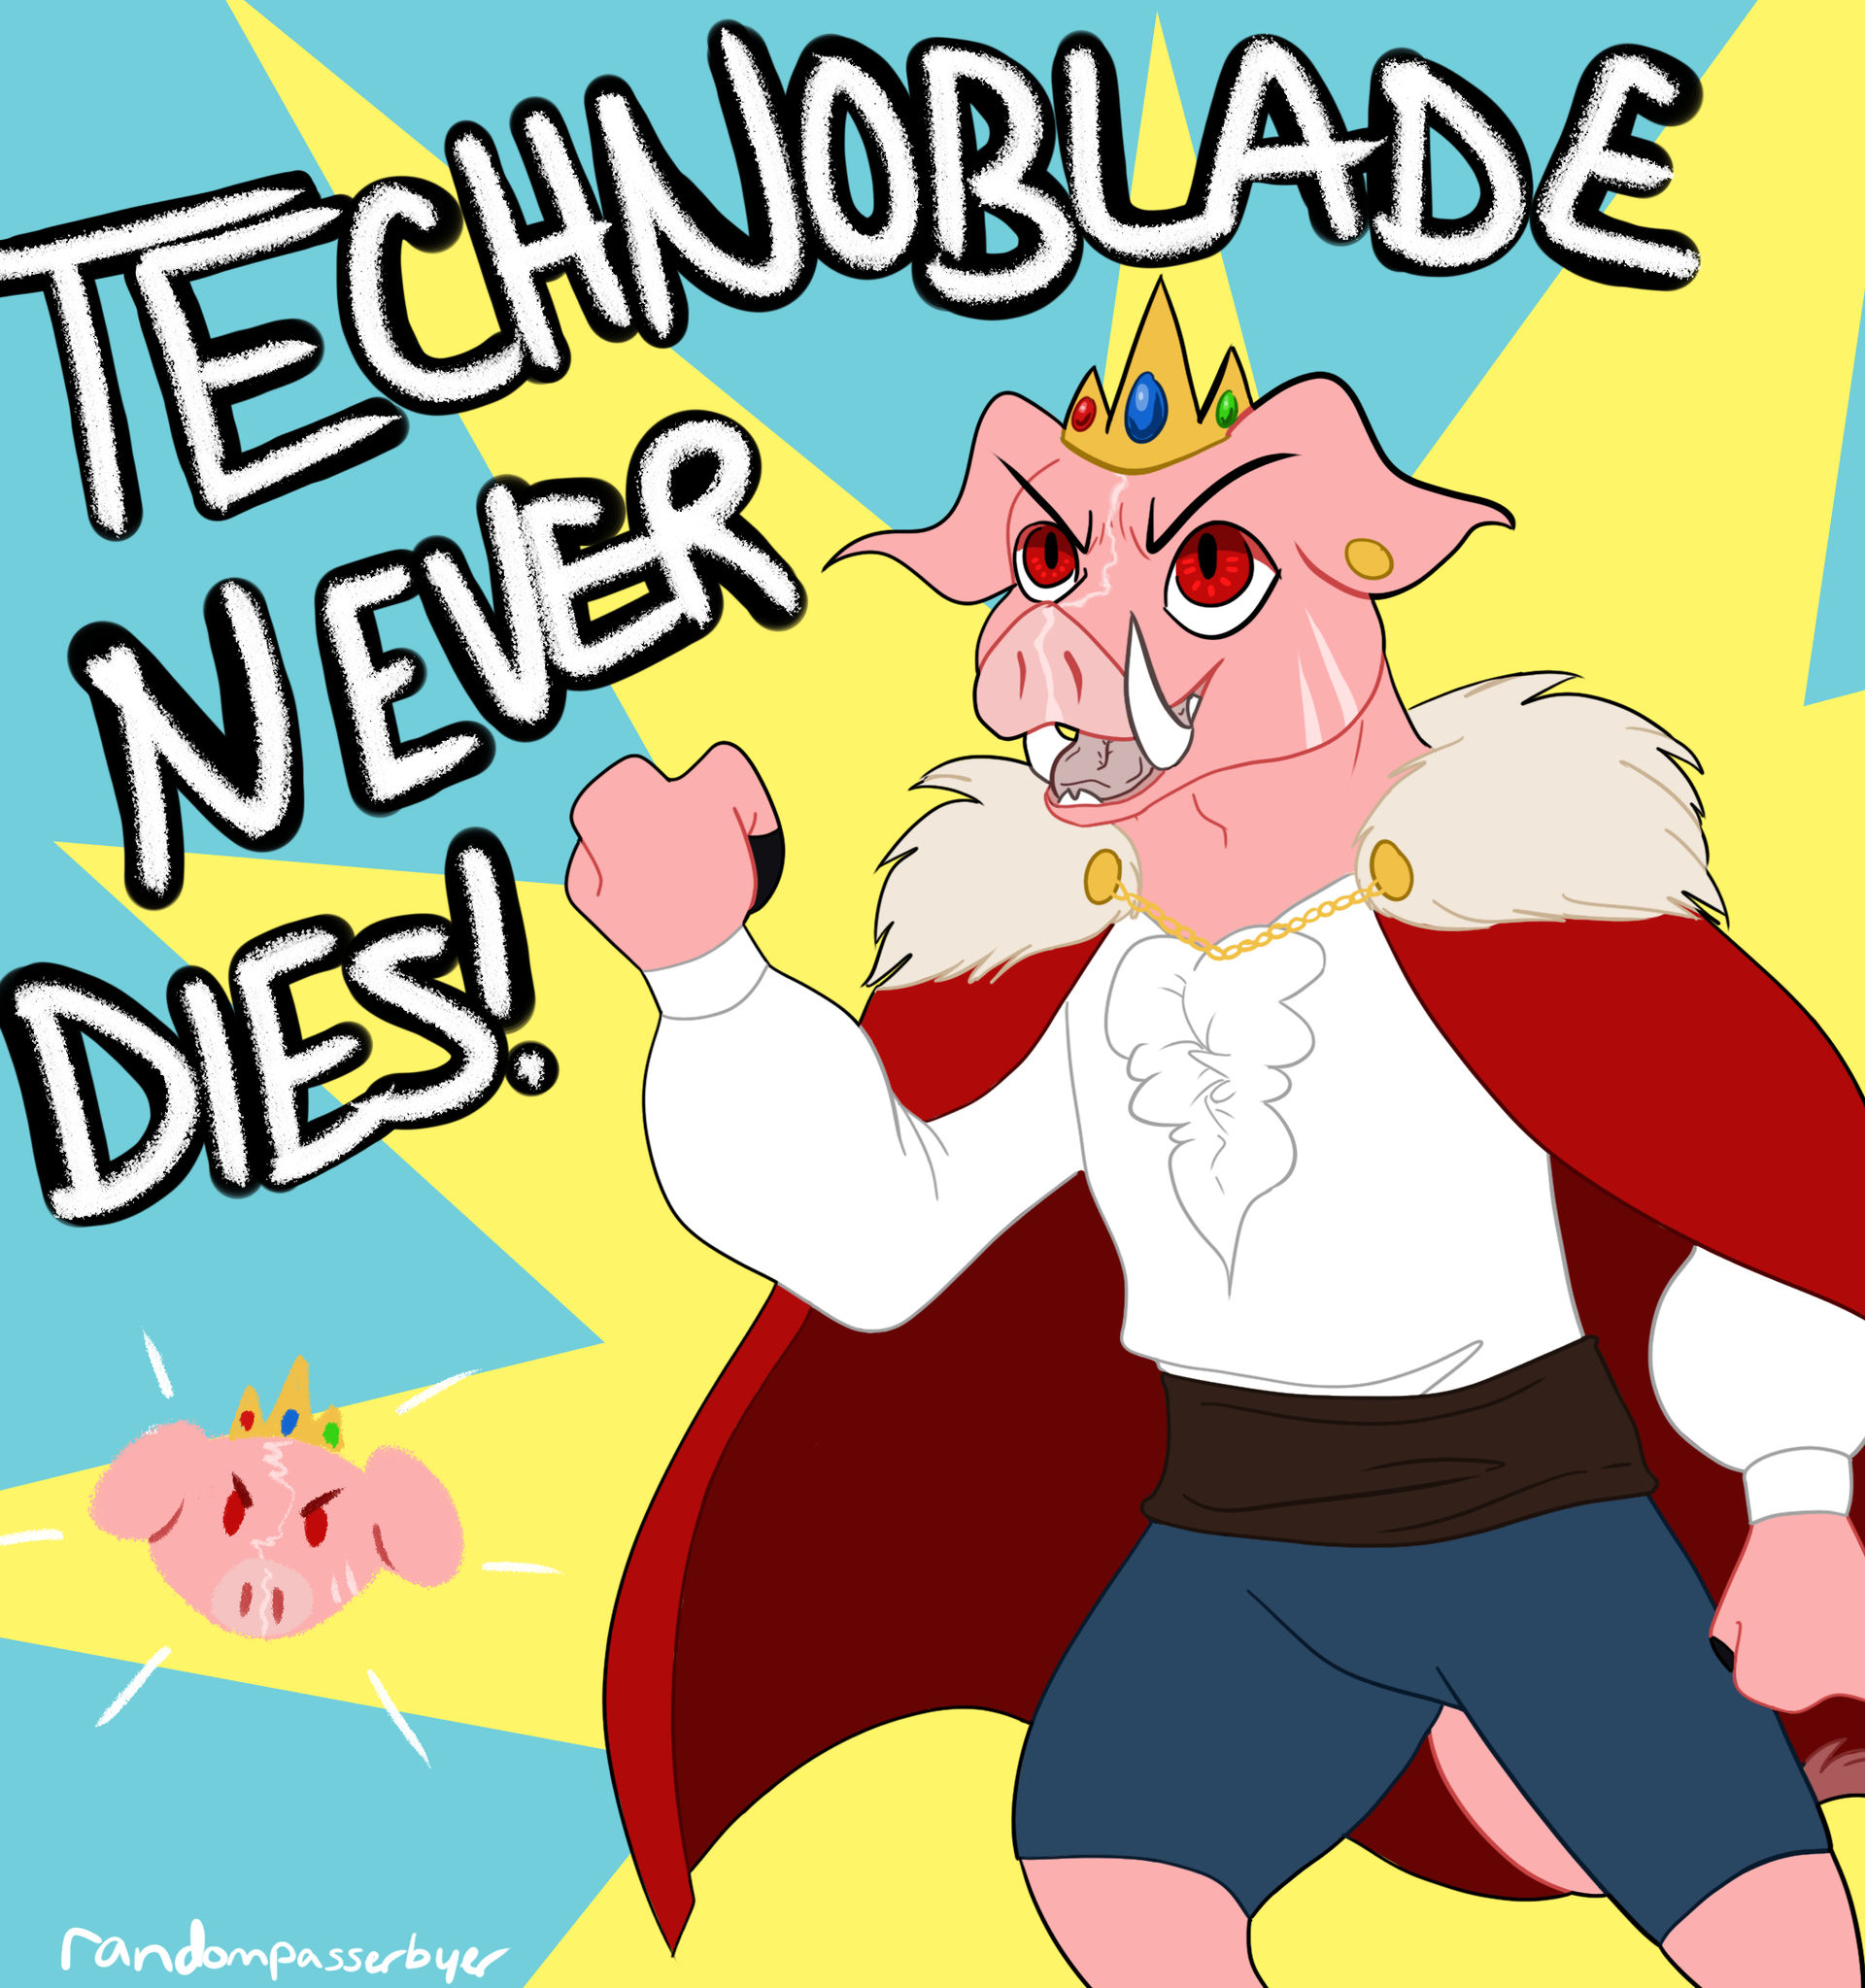 TECHNOBLADE NEVER DIES! : r/Technoblade